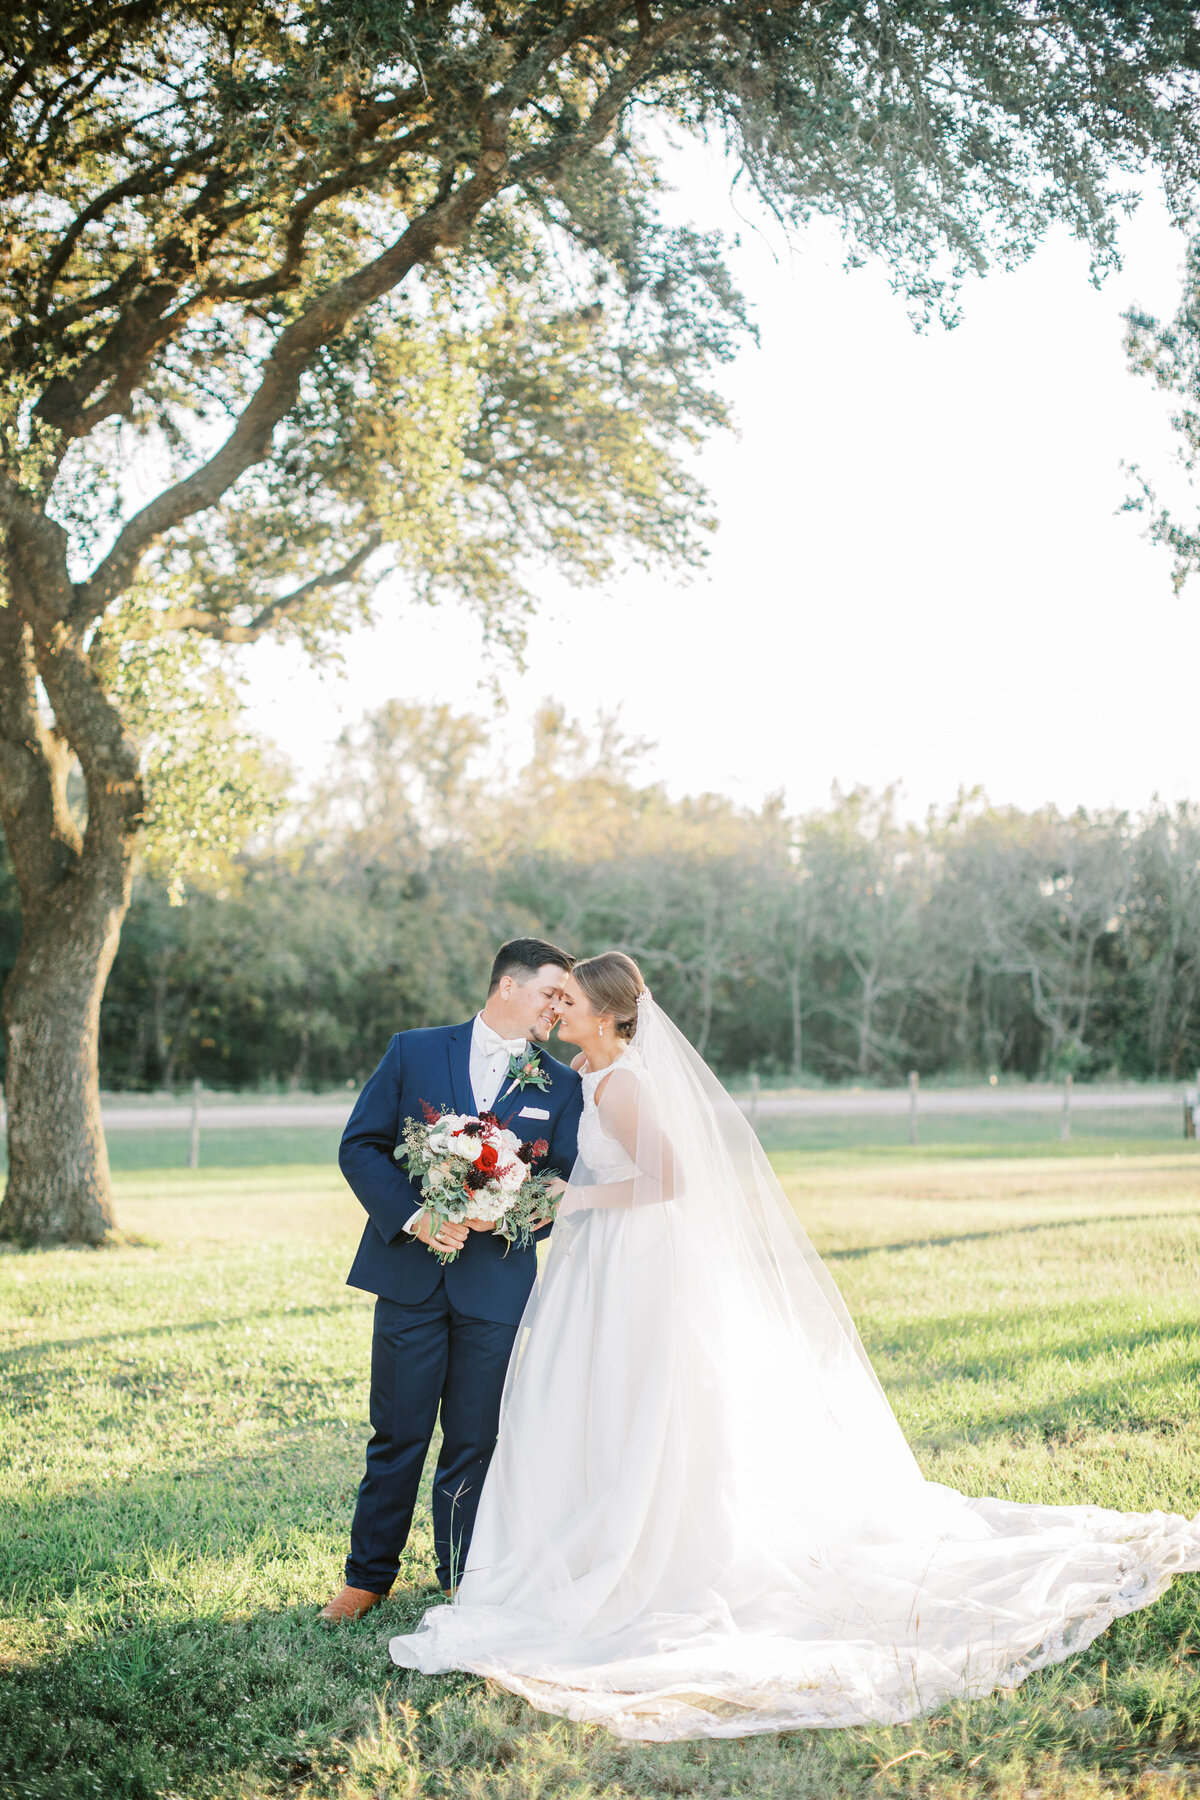 South Texas Wedding Photography | Jenny King Photography | Serving Victoria, Austin, San Antonio, Houston, Destinations